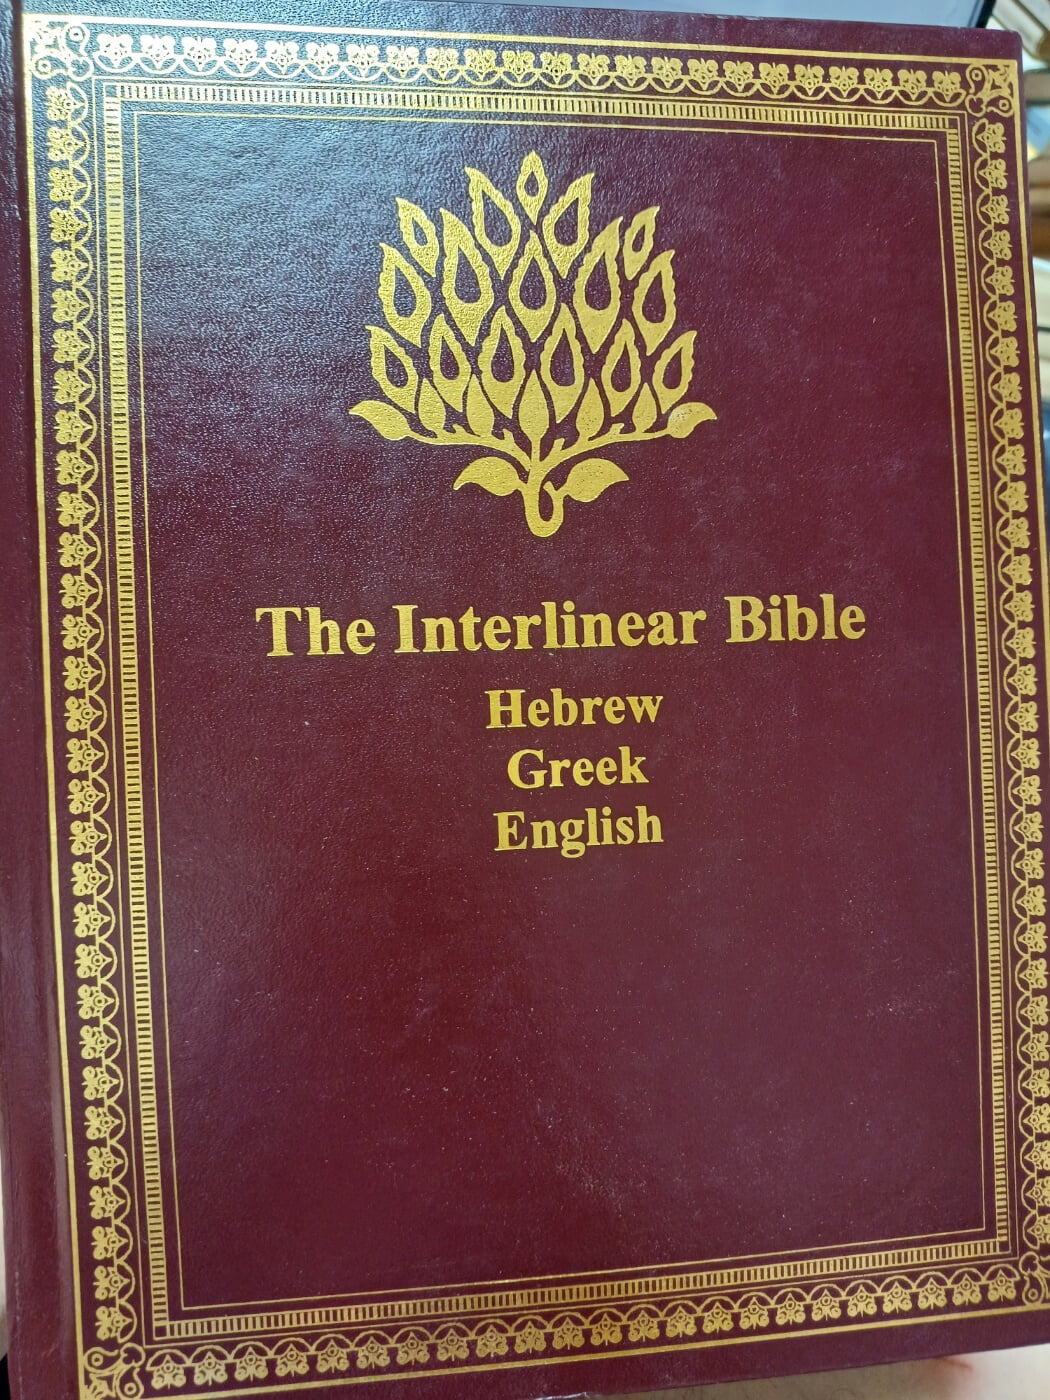 The Interlinear Bible - Hebrew, Greek, English